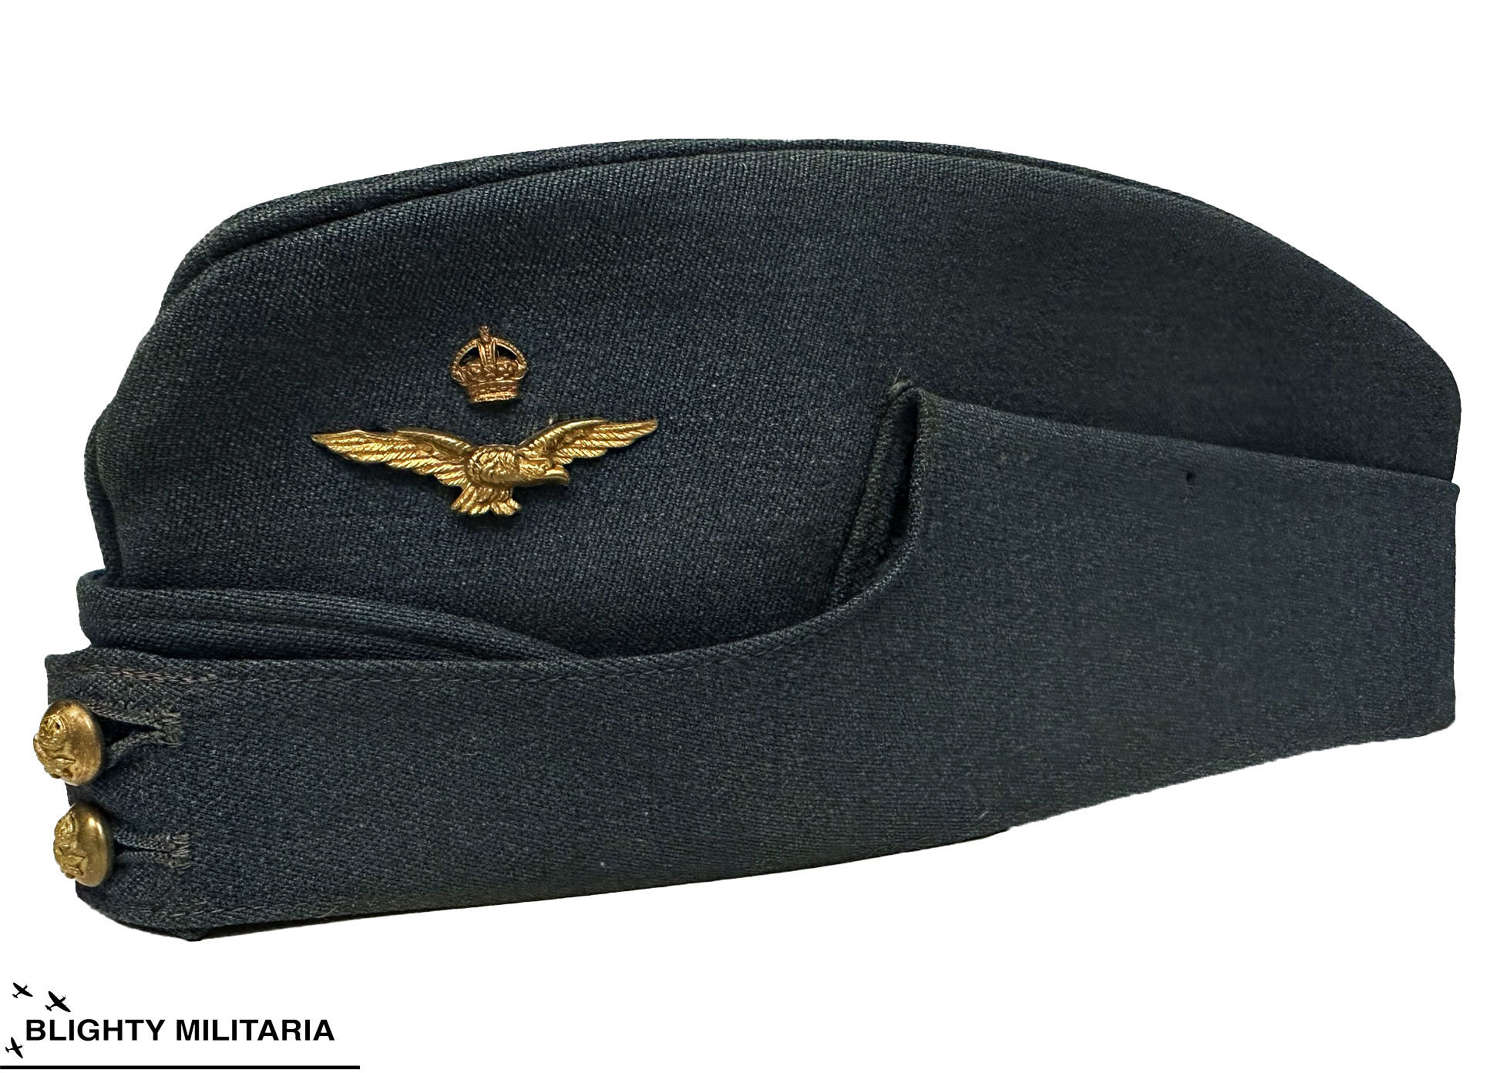 Original WW2 RAF Officer's Forage Cap - Large SIze